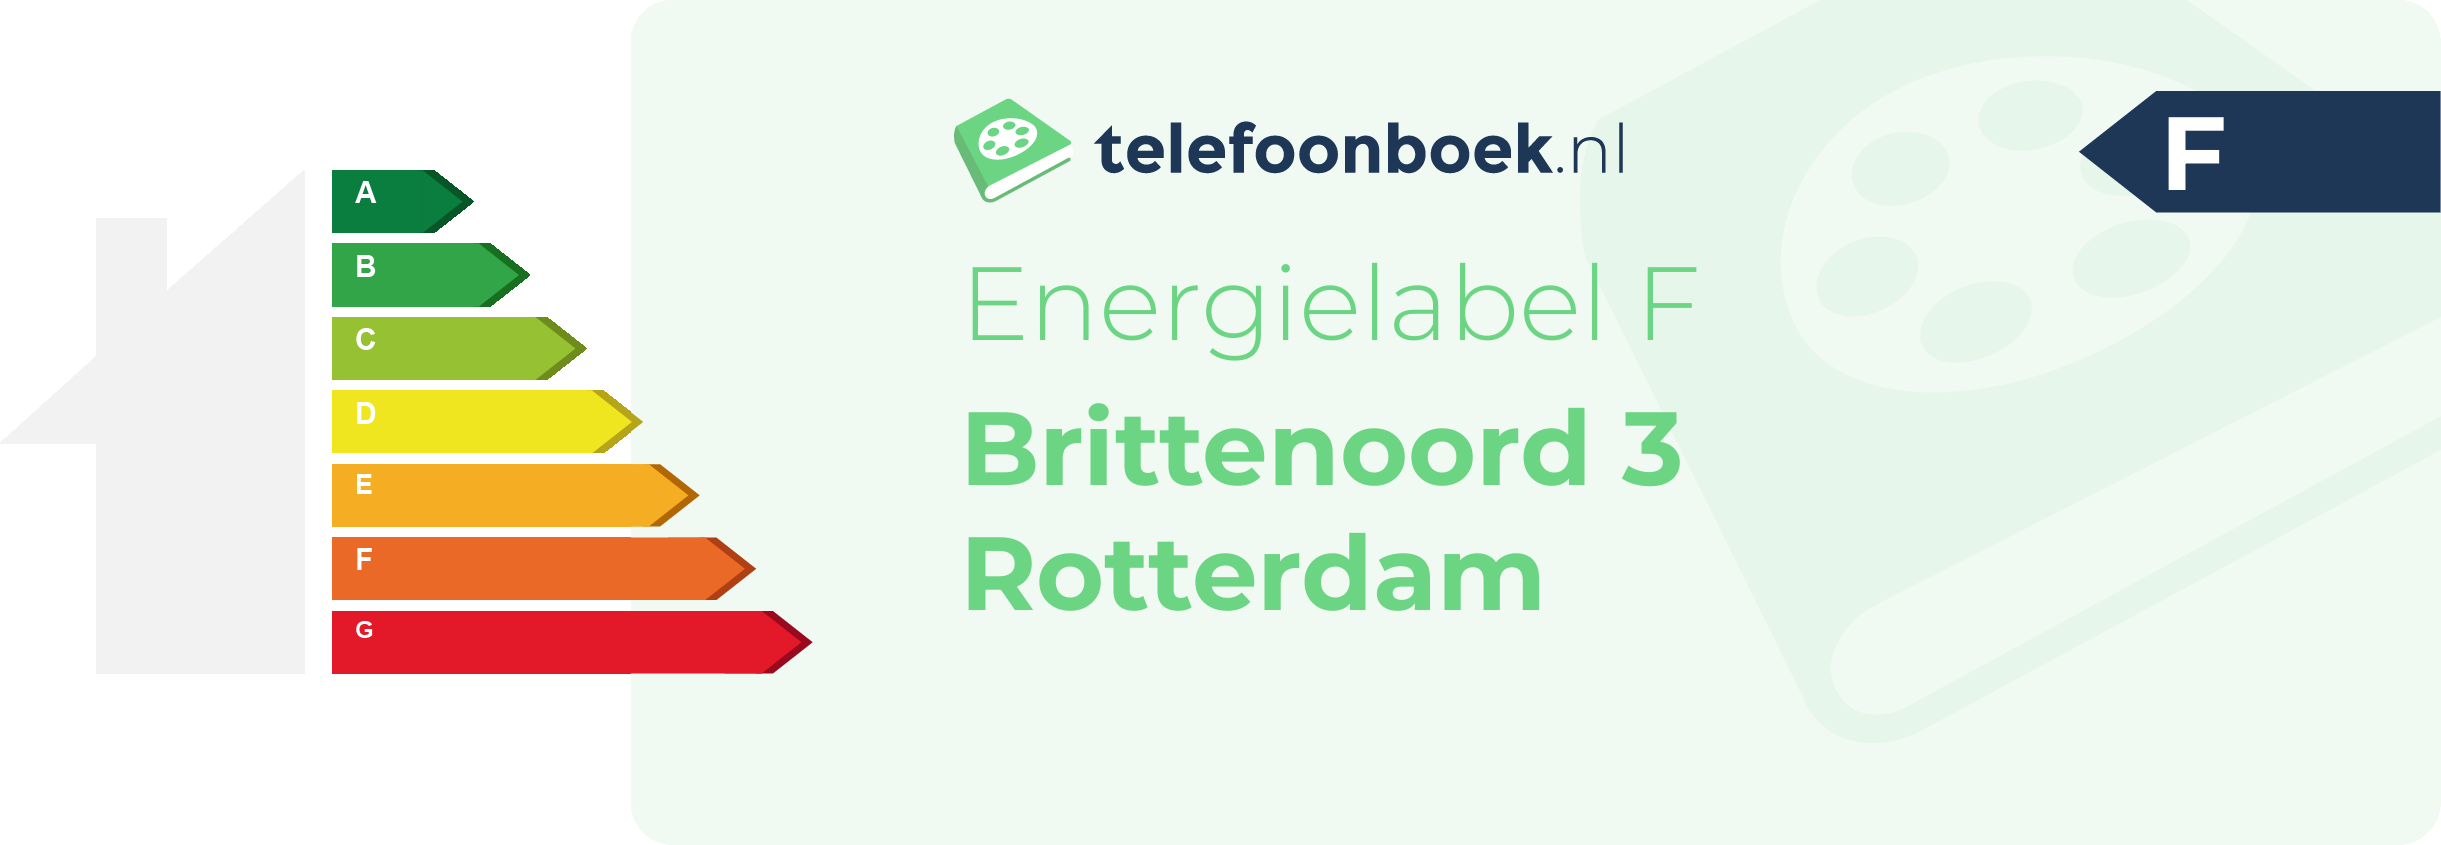 Energielabel Brittenoord 3 Rotterdam